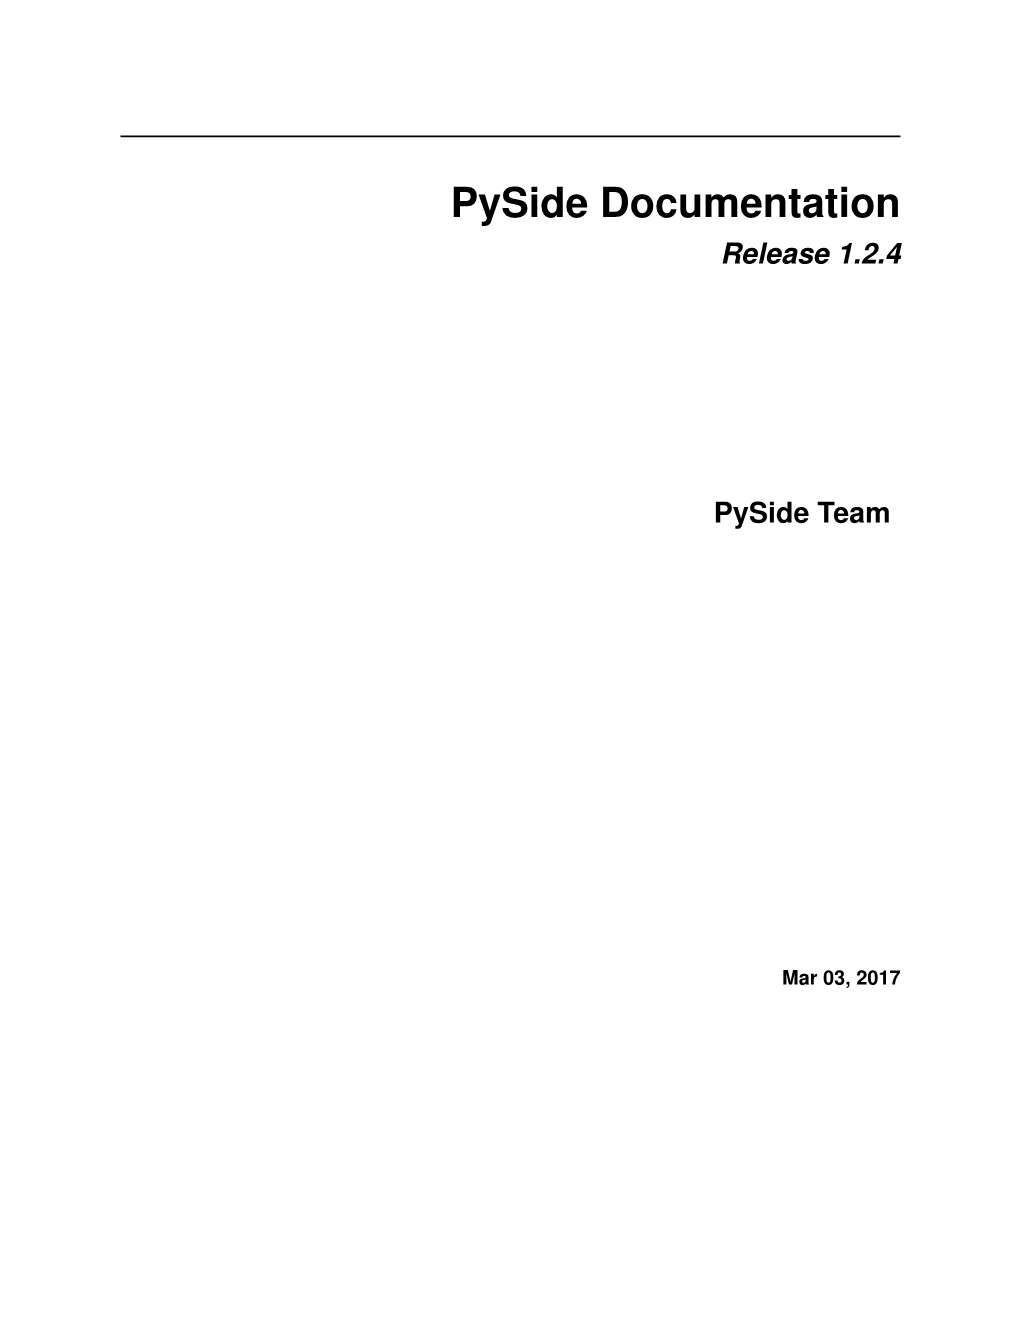 Pyside Documentation Release 1.2.4